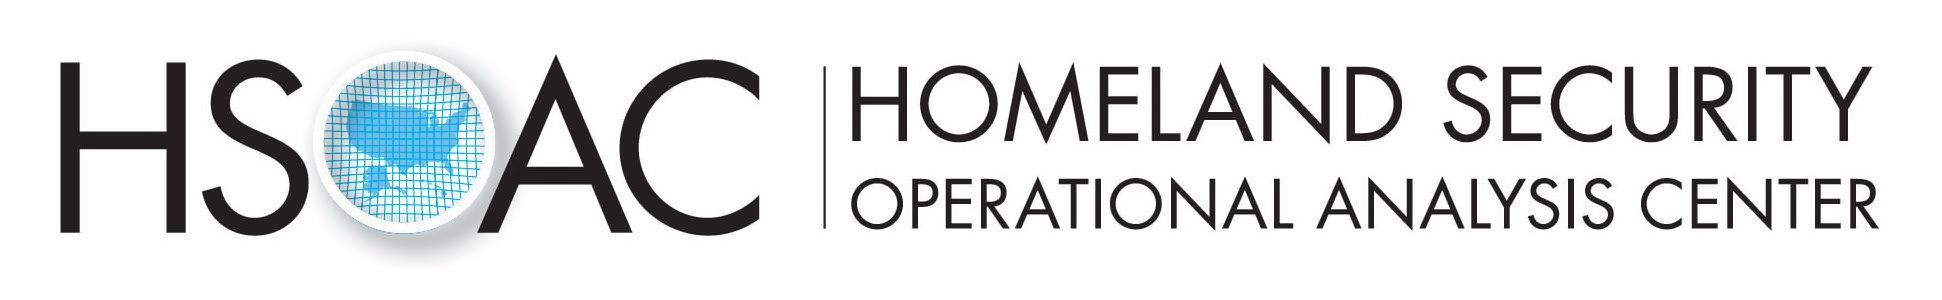 HSOAC HOMELAND SECURITY OPERATIONAL ANALYSIS CENTER